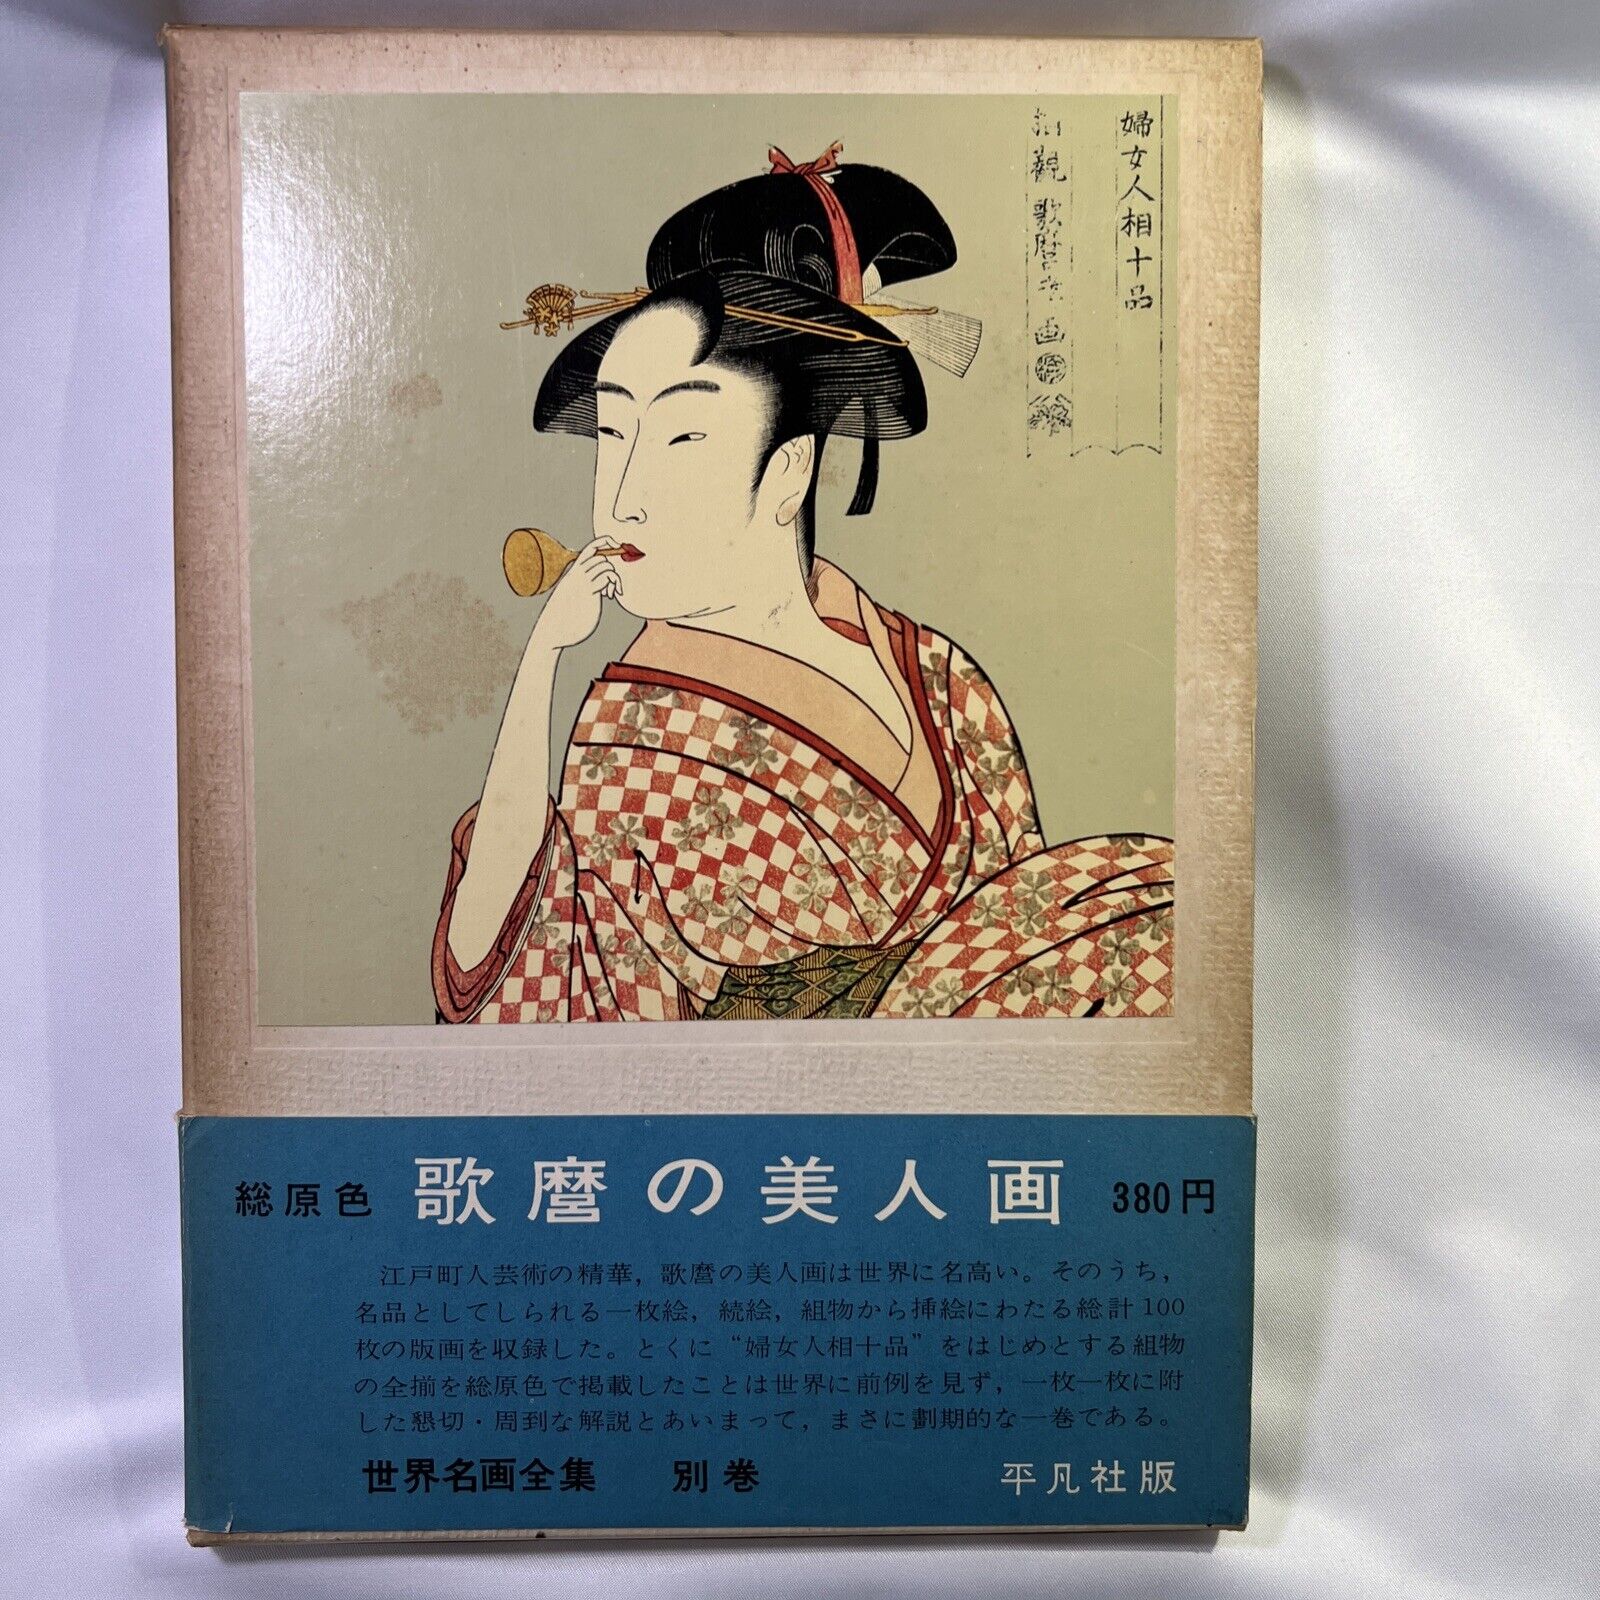 Introducing Book featured JAPANESE KITAGAWA UTAMARO UKIYO-E WOODBLOCK PRINT